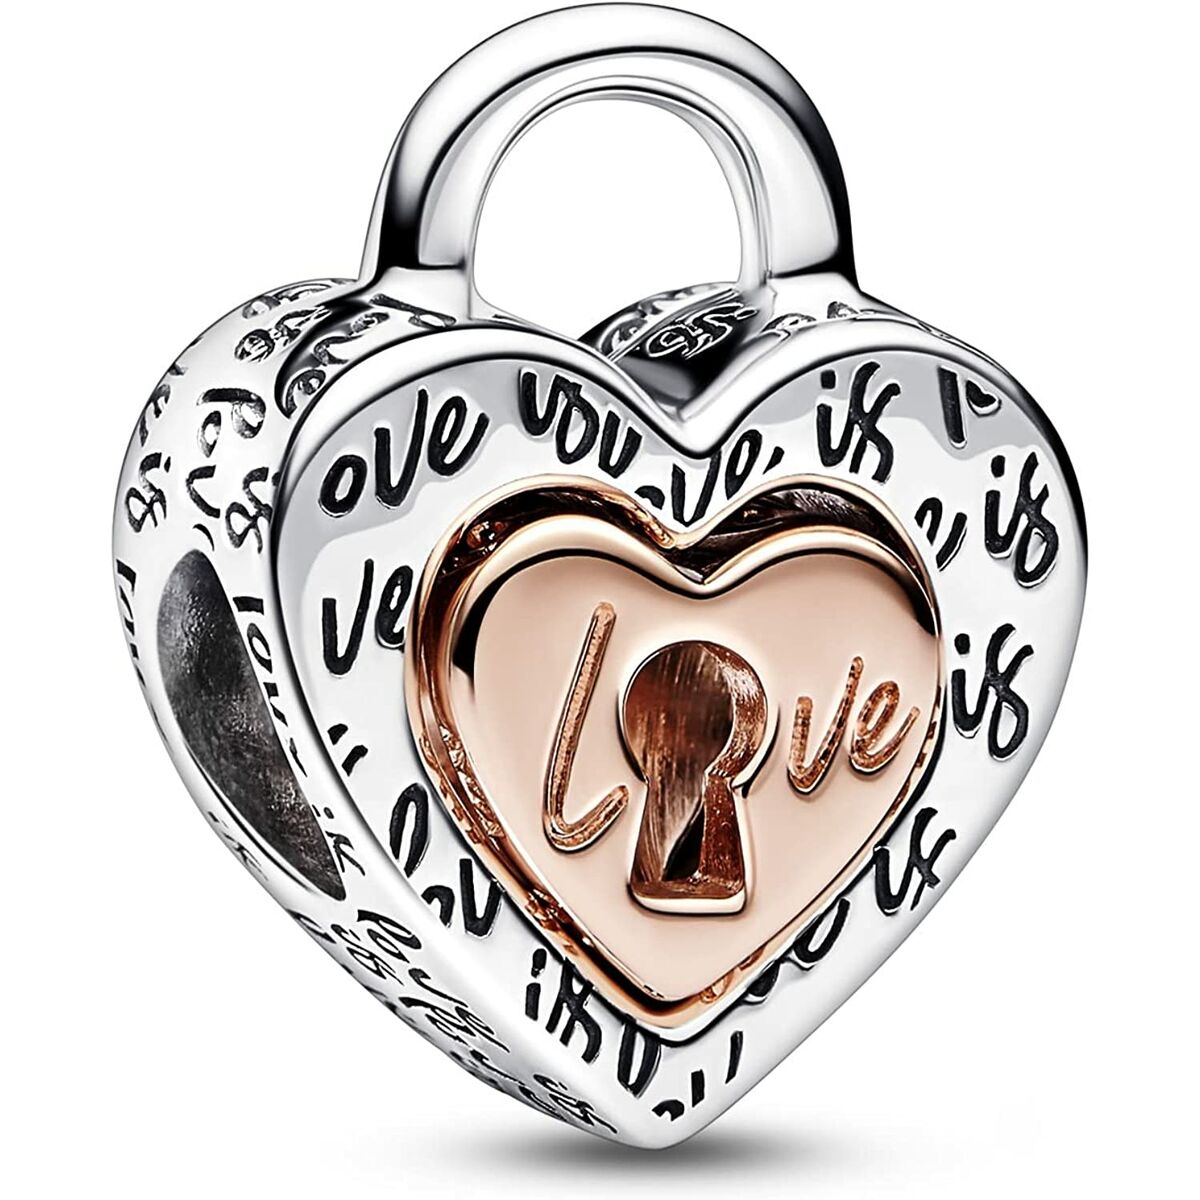 Woman's charm link Pandora TWO-TONE PADLOCK SPLITTABLE HEART